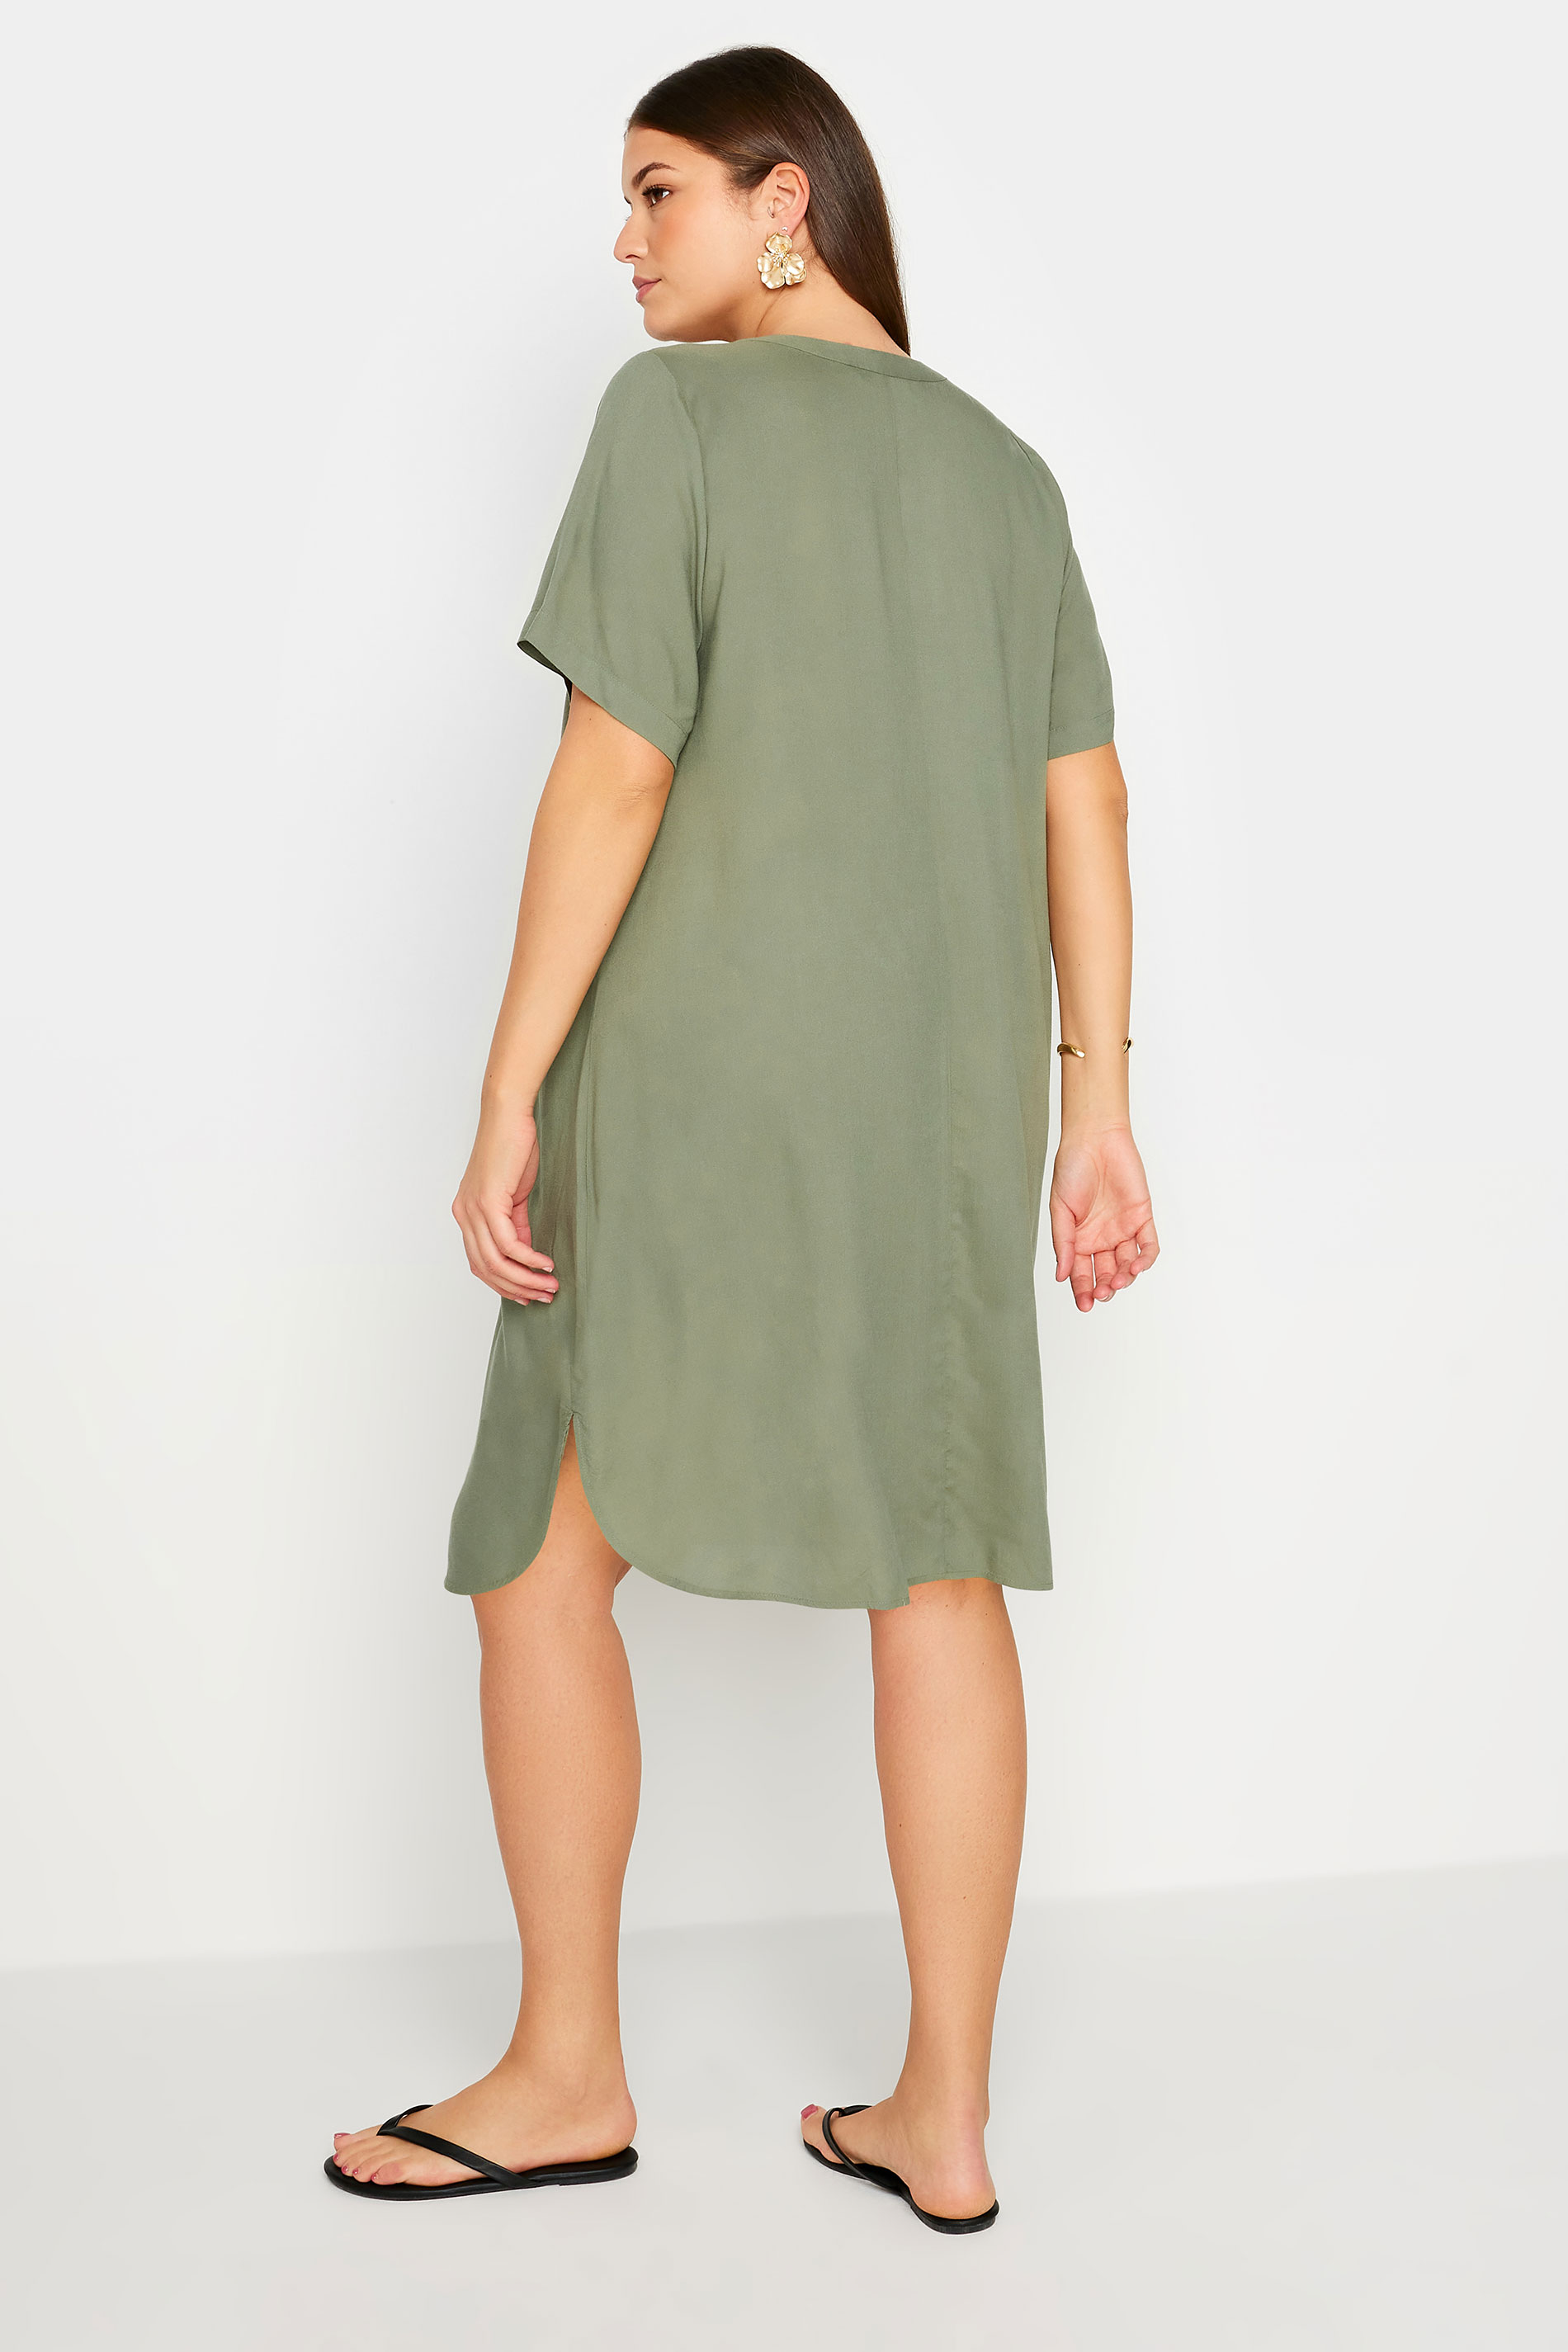 Yours Plus Size Khaki Green Tunic Dress | Yours Clothing 3